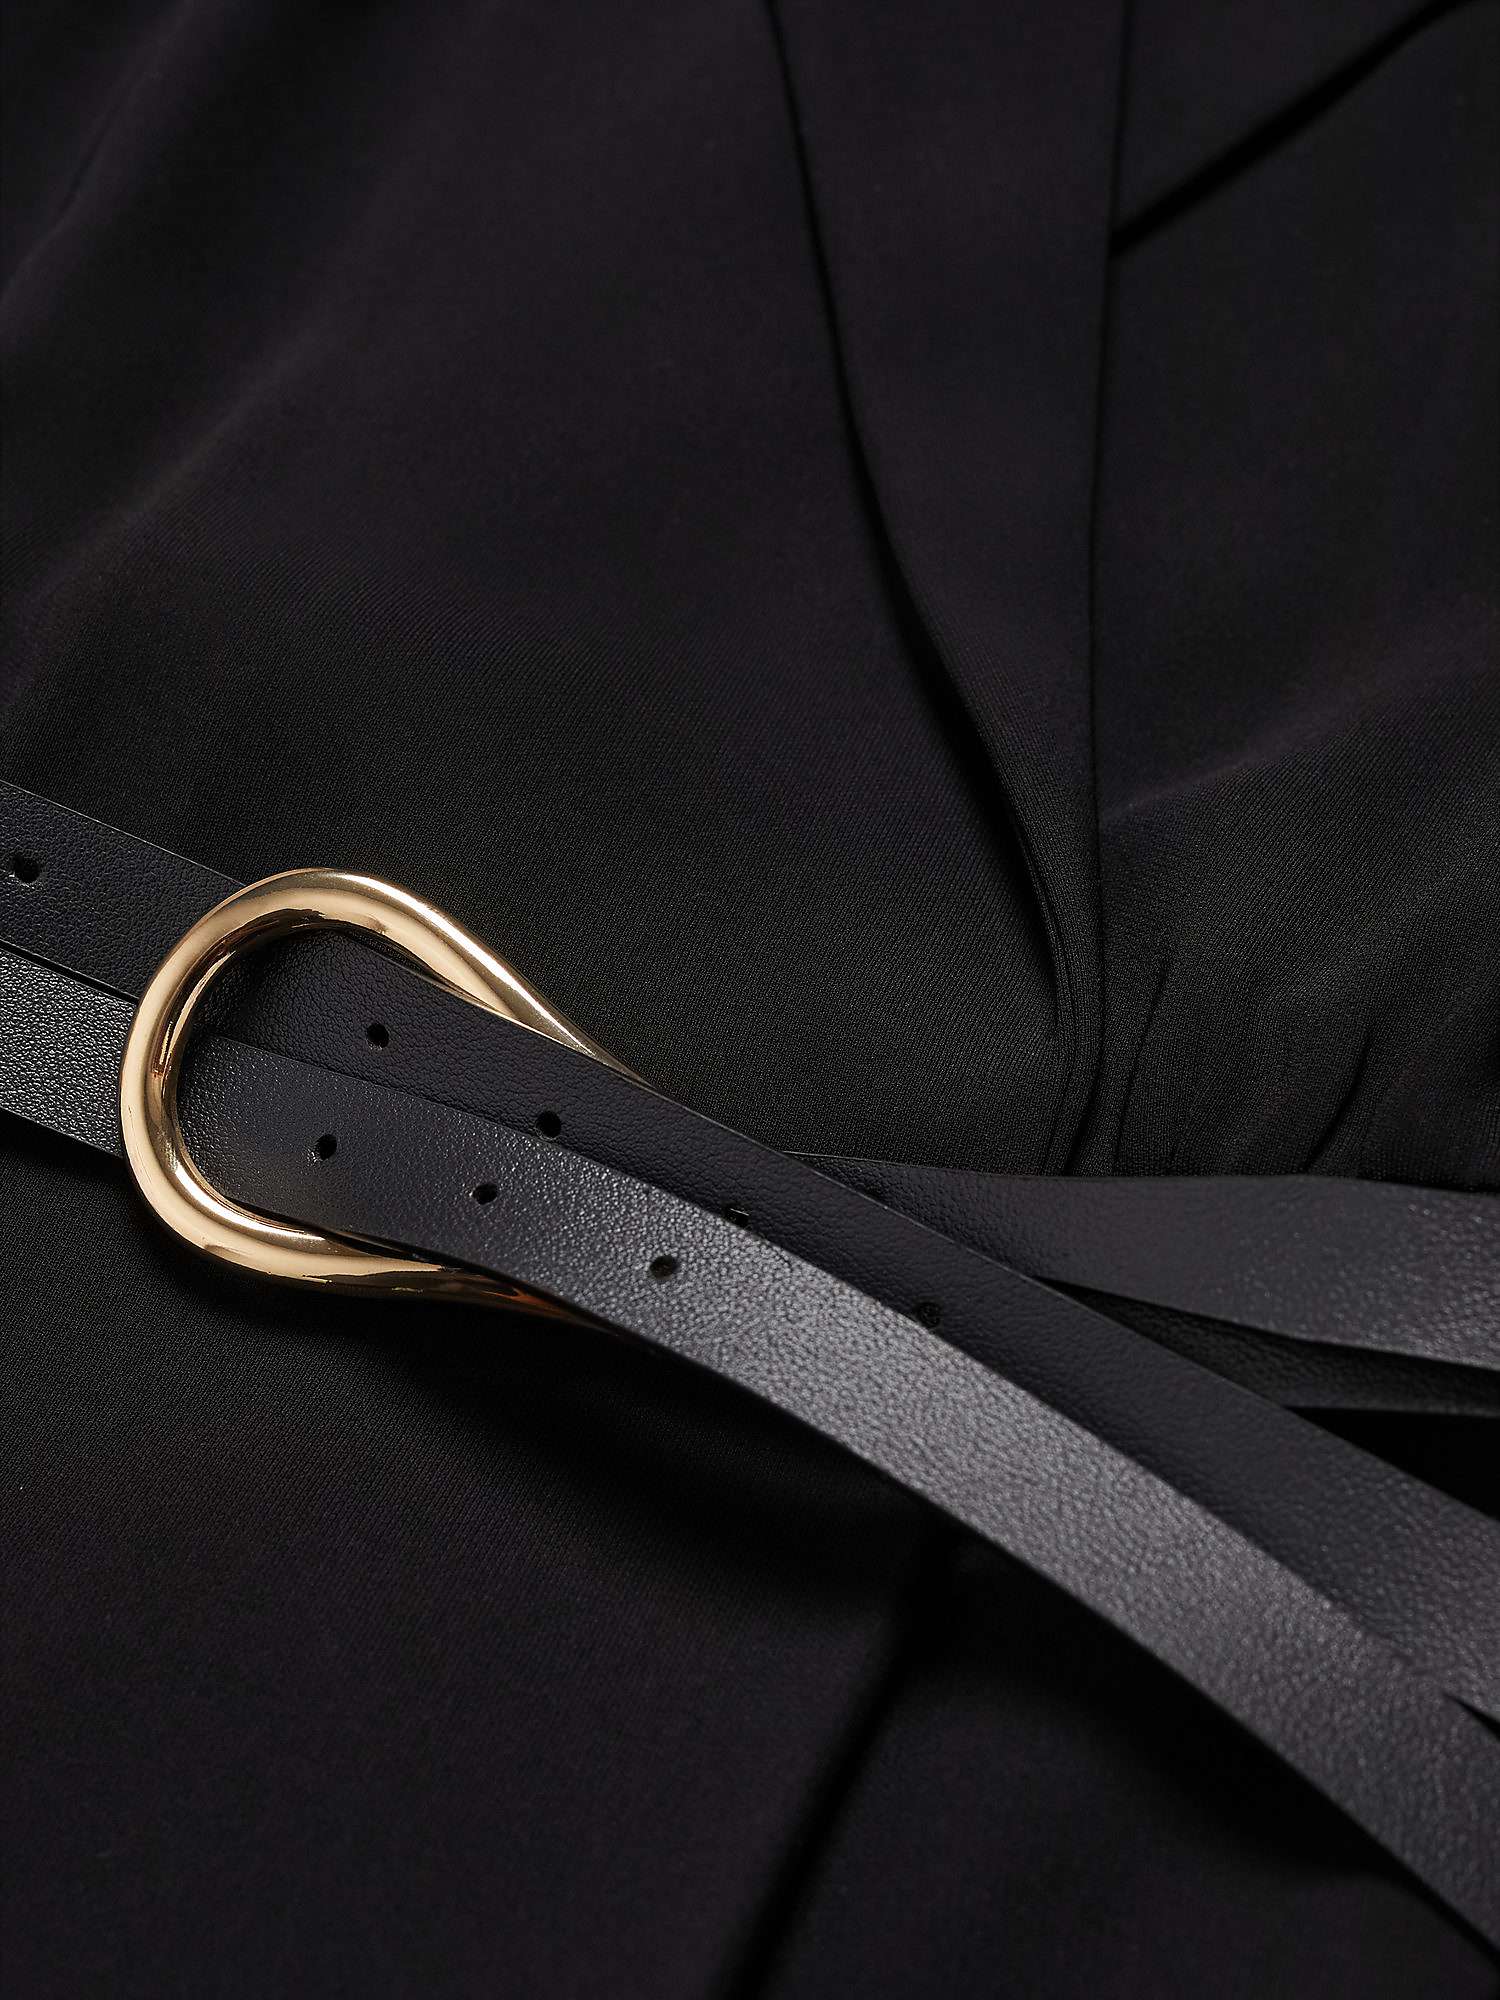 Mango Fabiana Belted Blazer Dress, Black at John Lewis & Partners